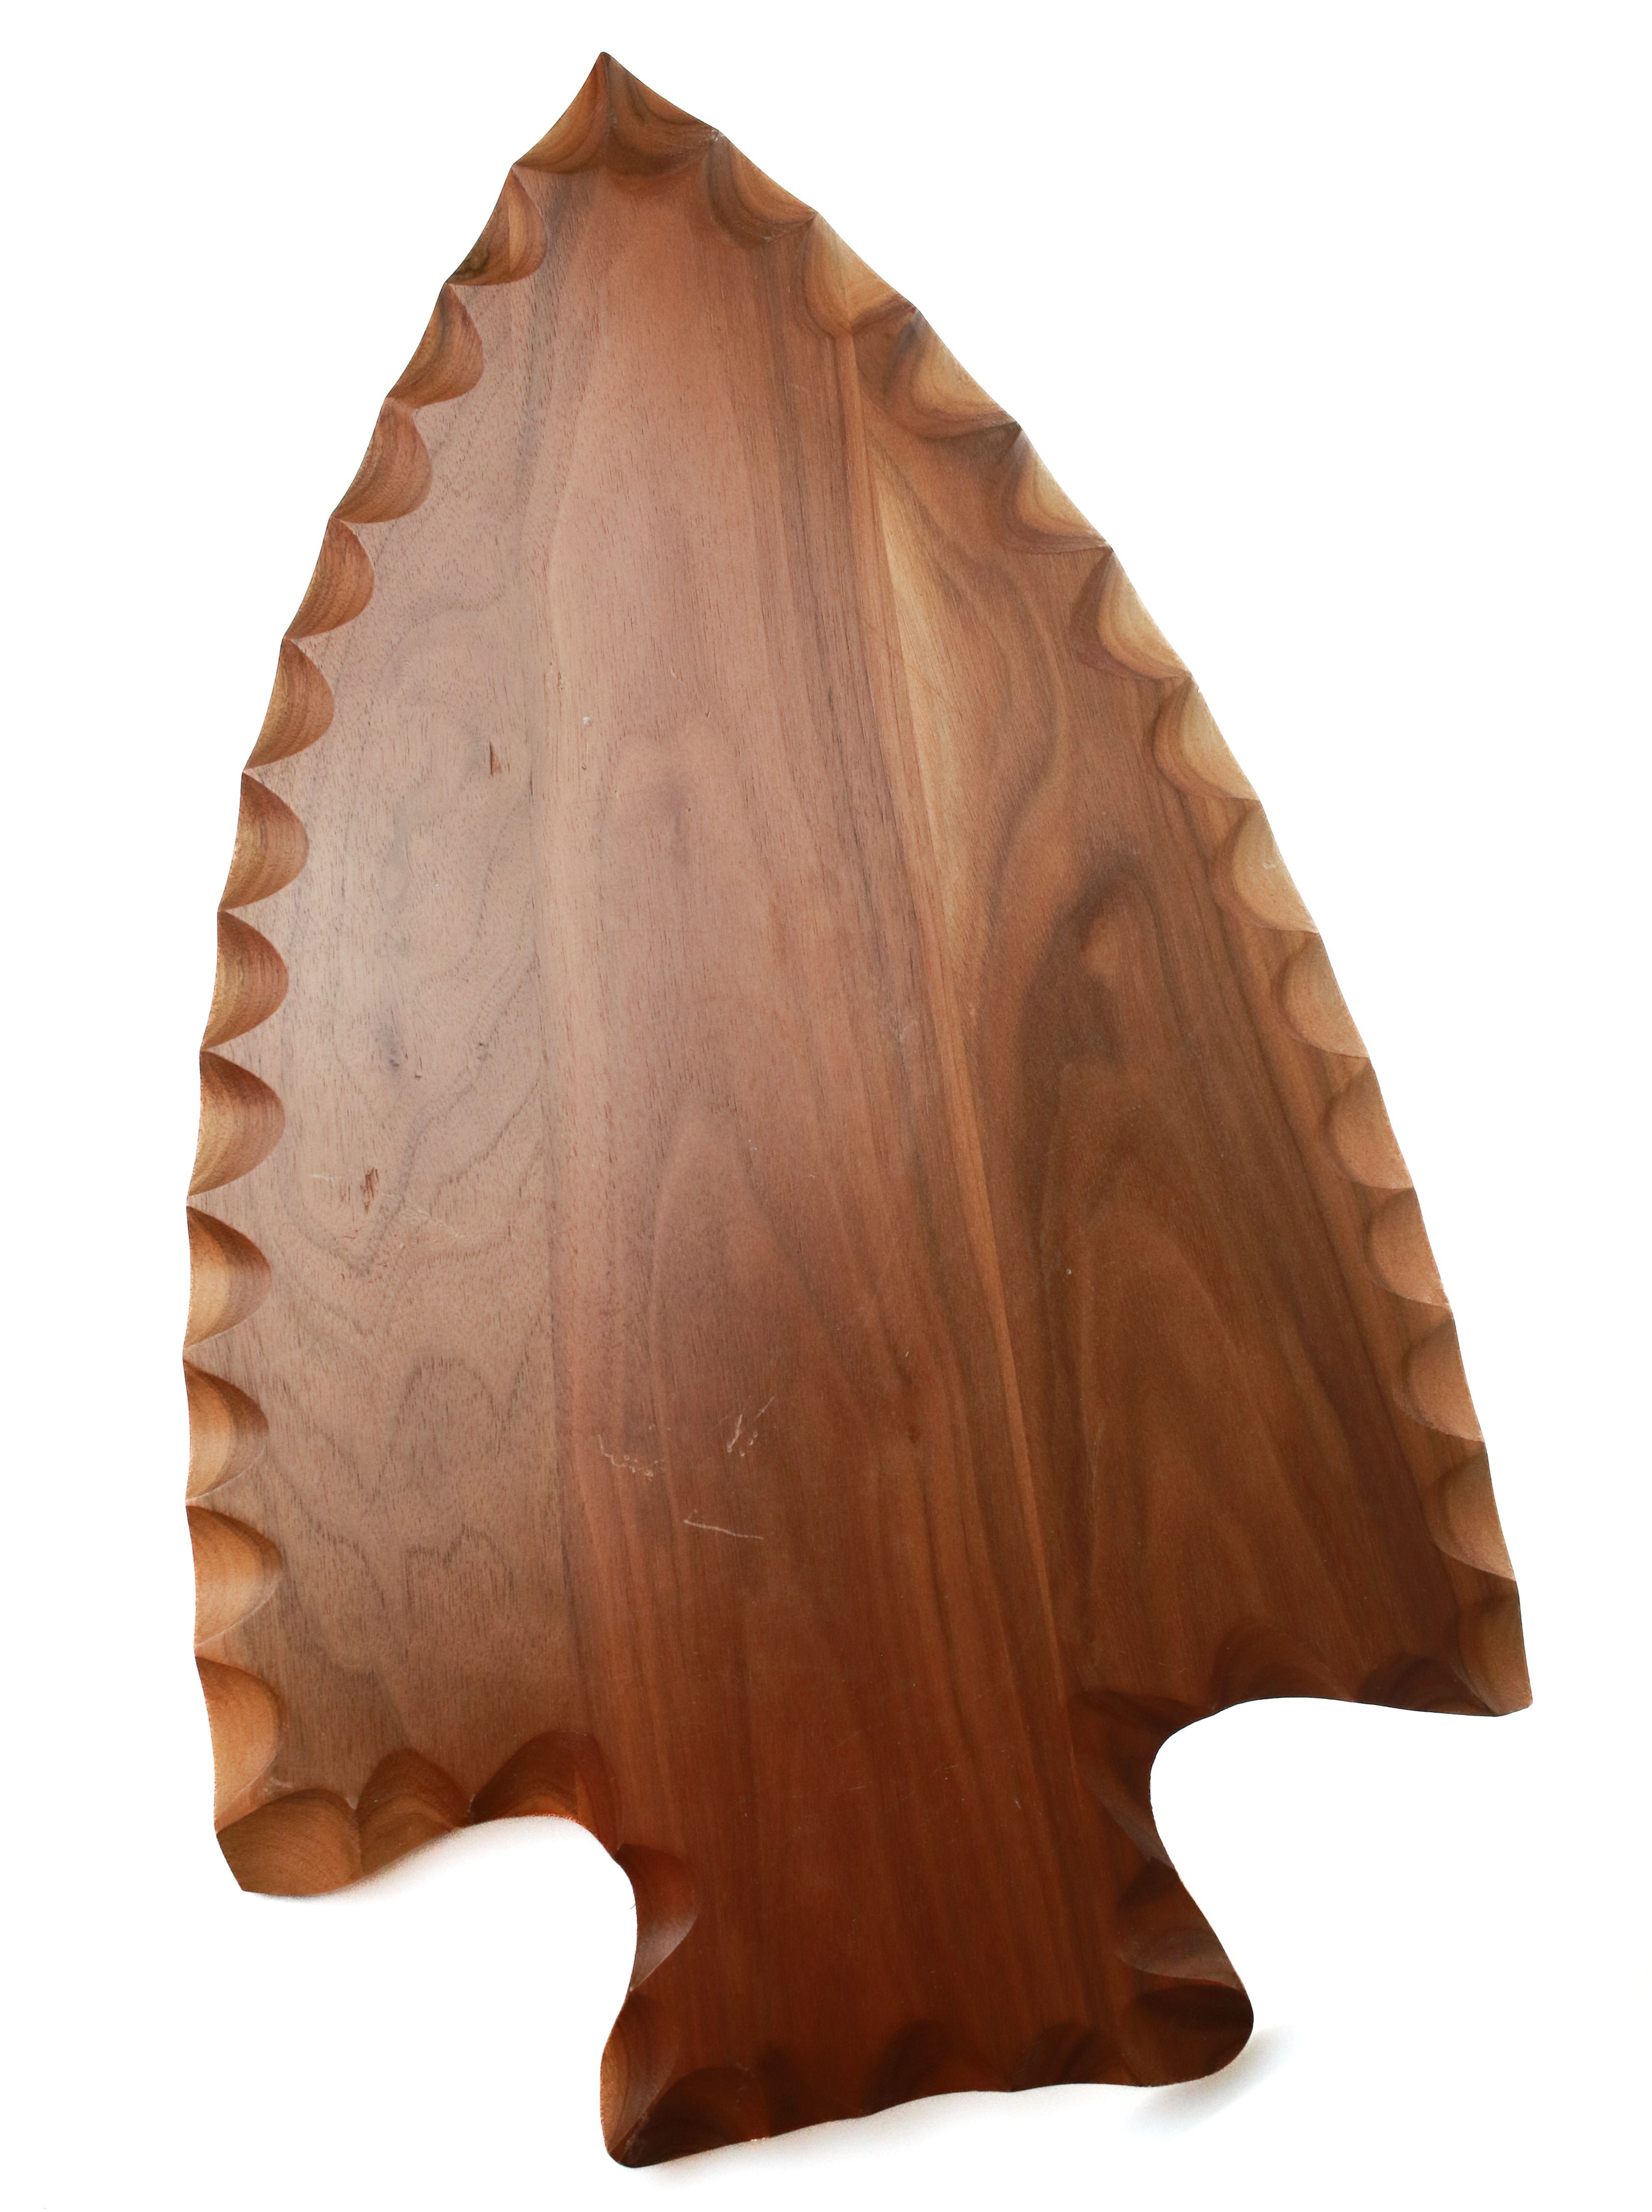 Solid Wood Arrowhead Hand-carved Cutting Board